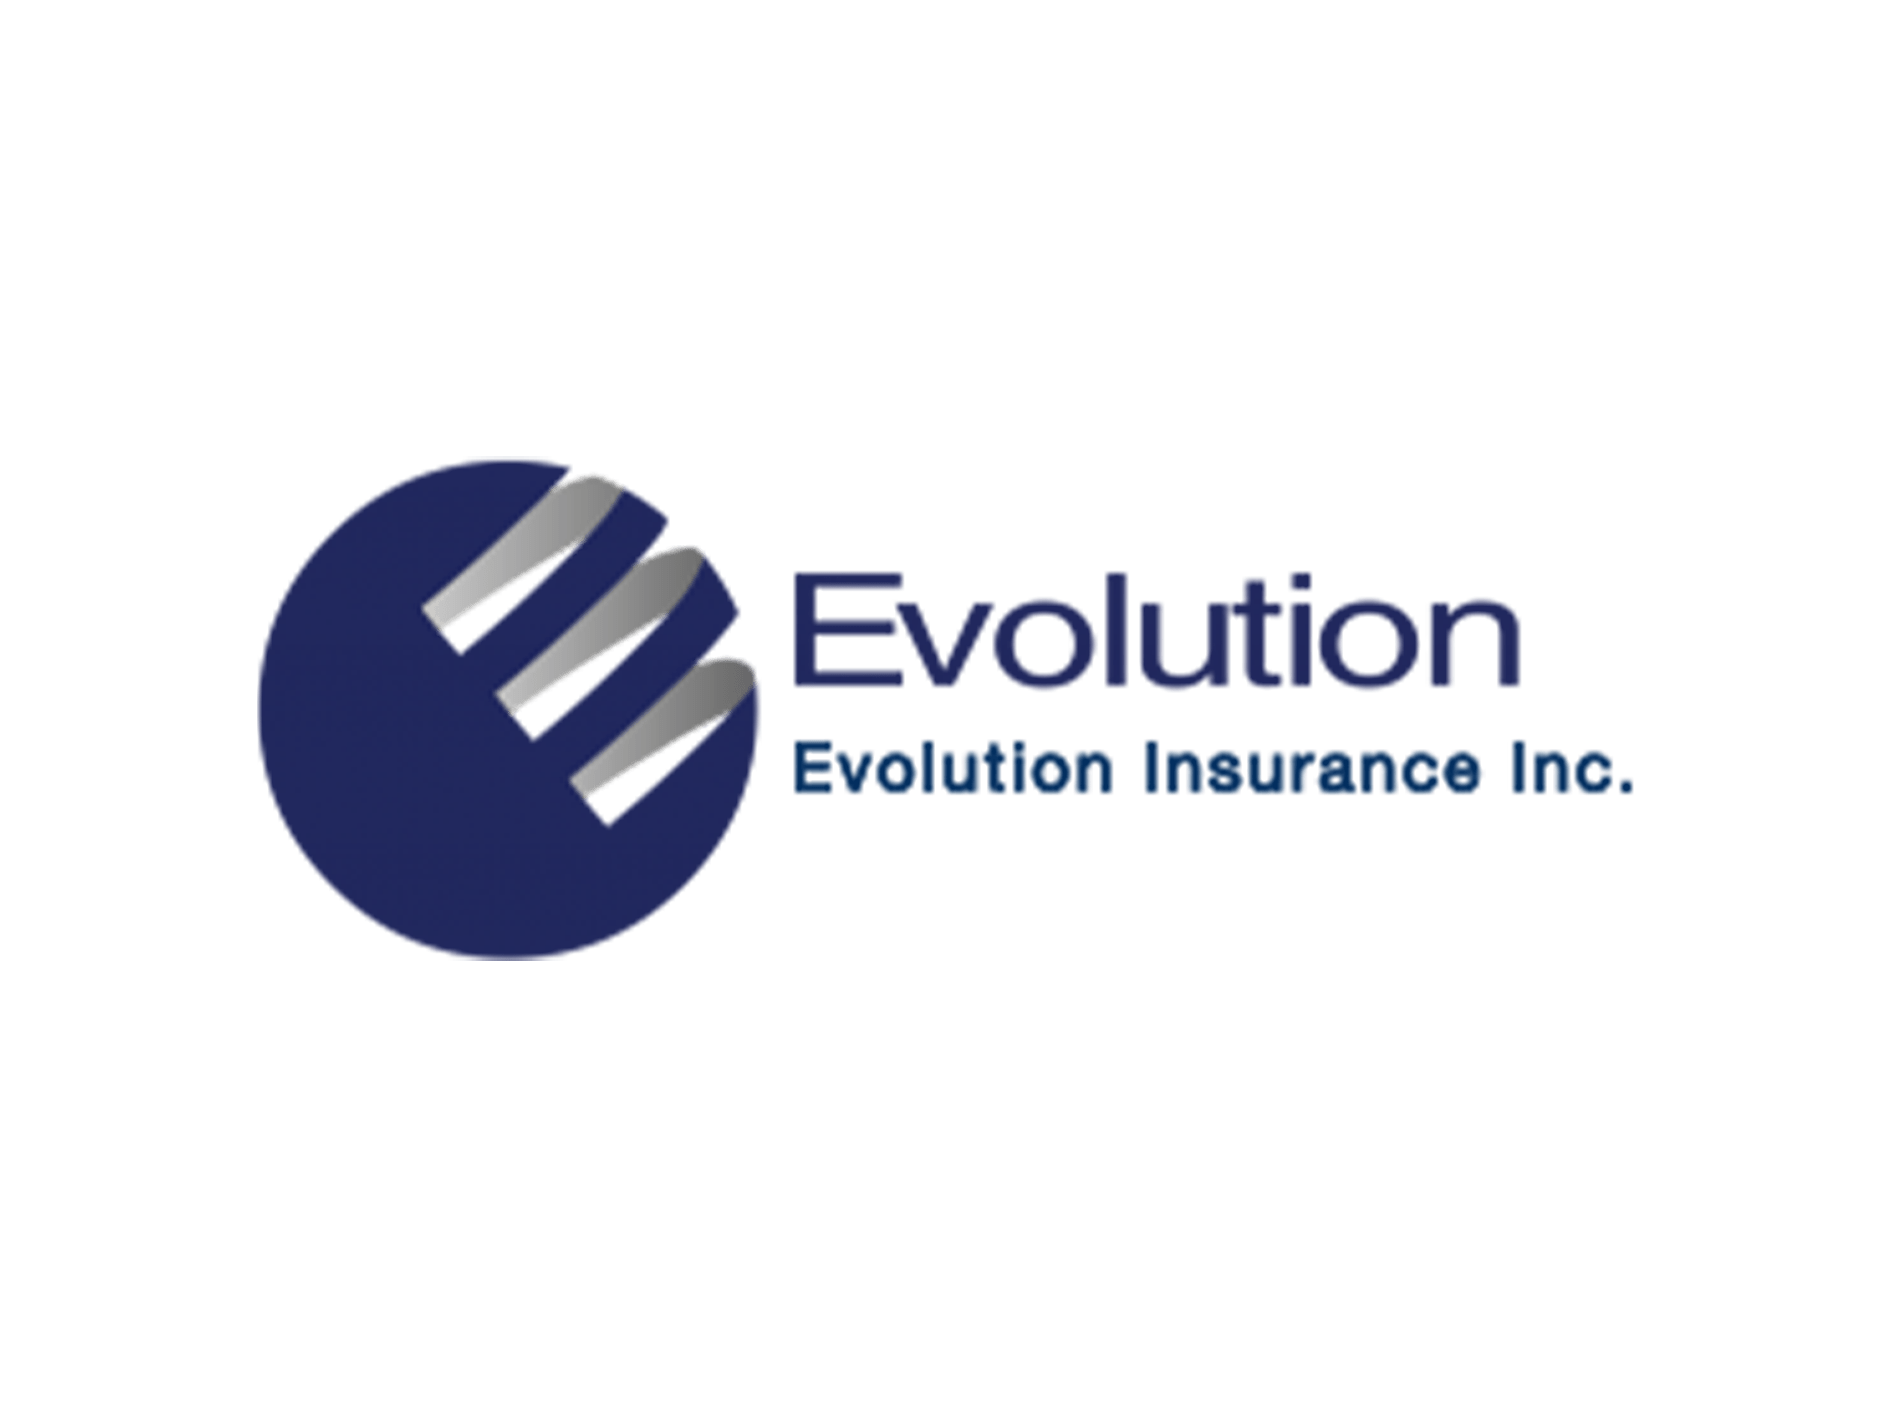 Evolution Insurance Inc.